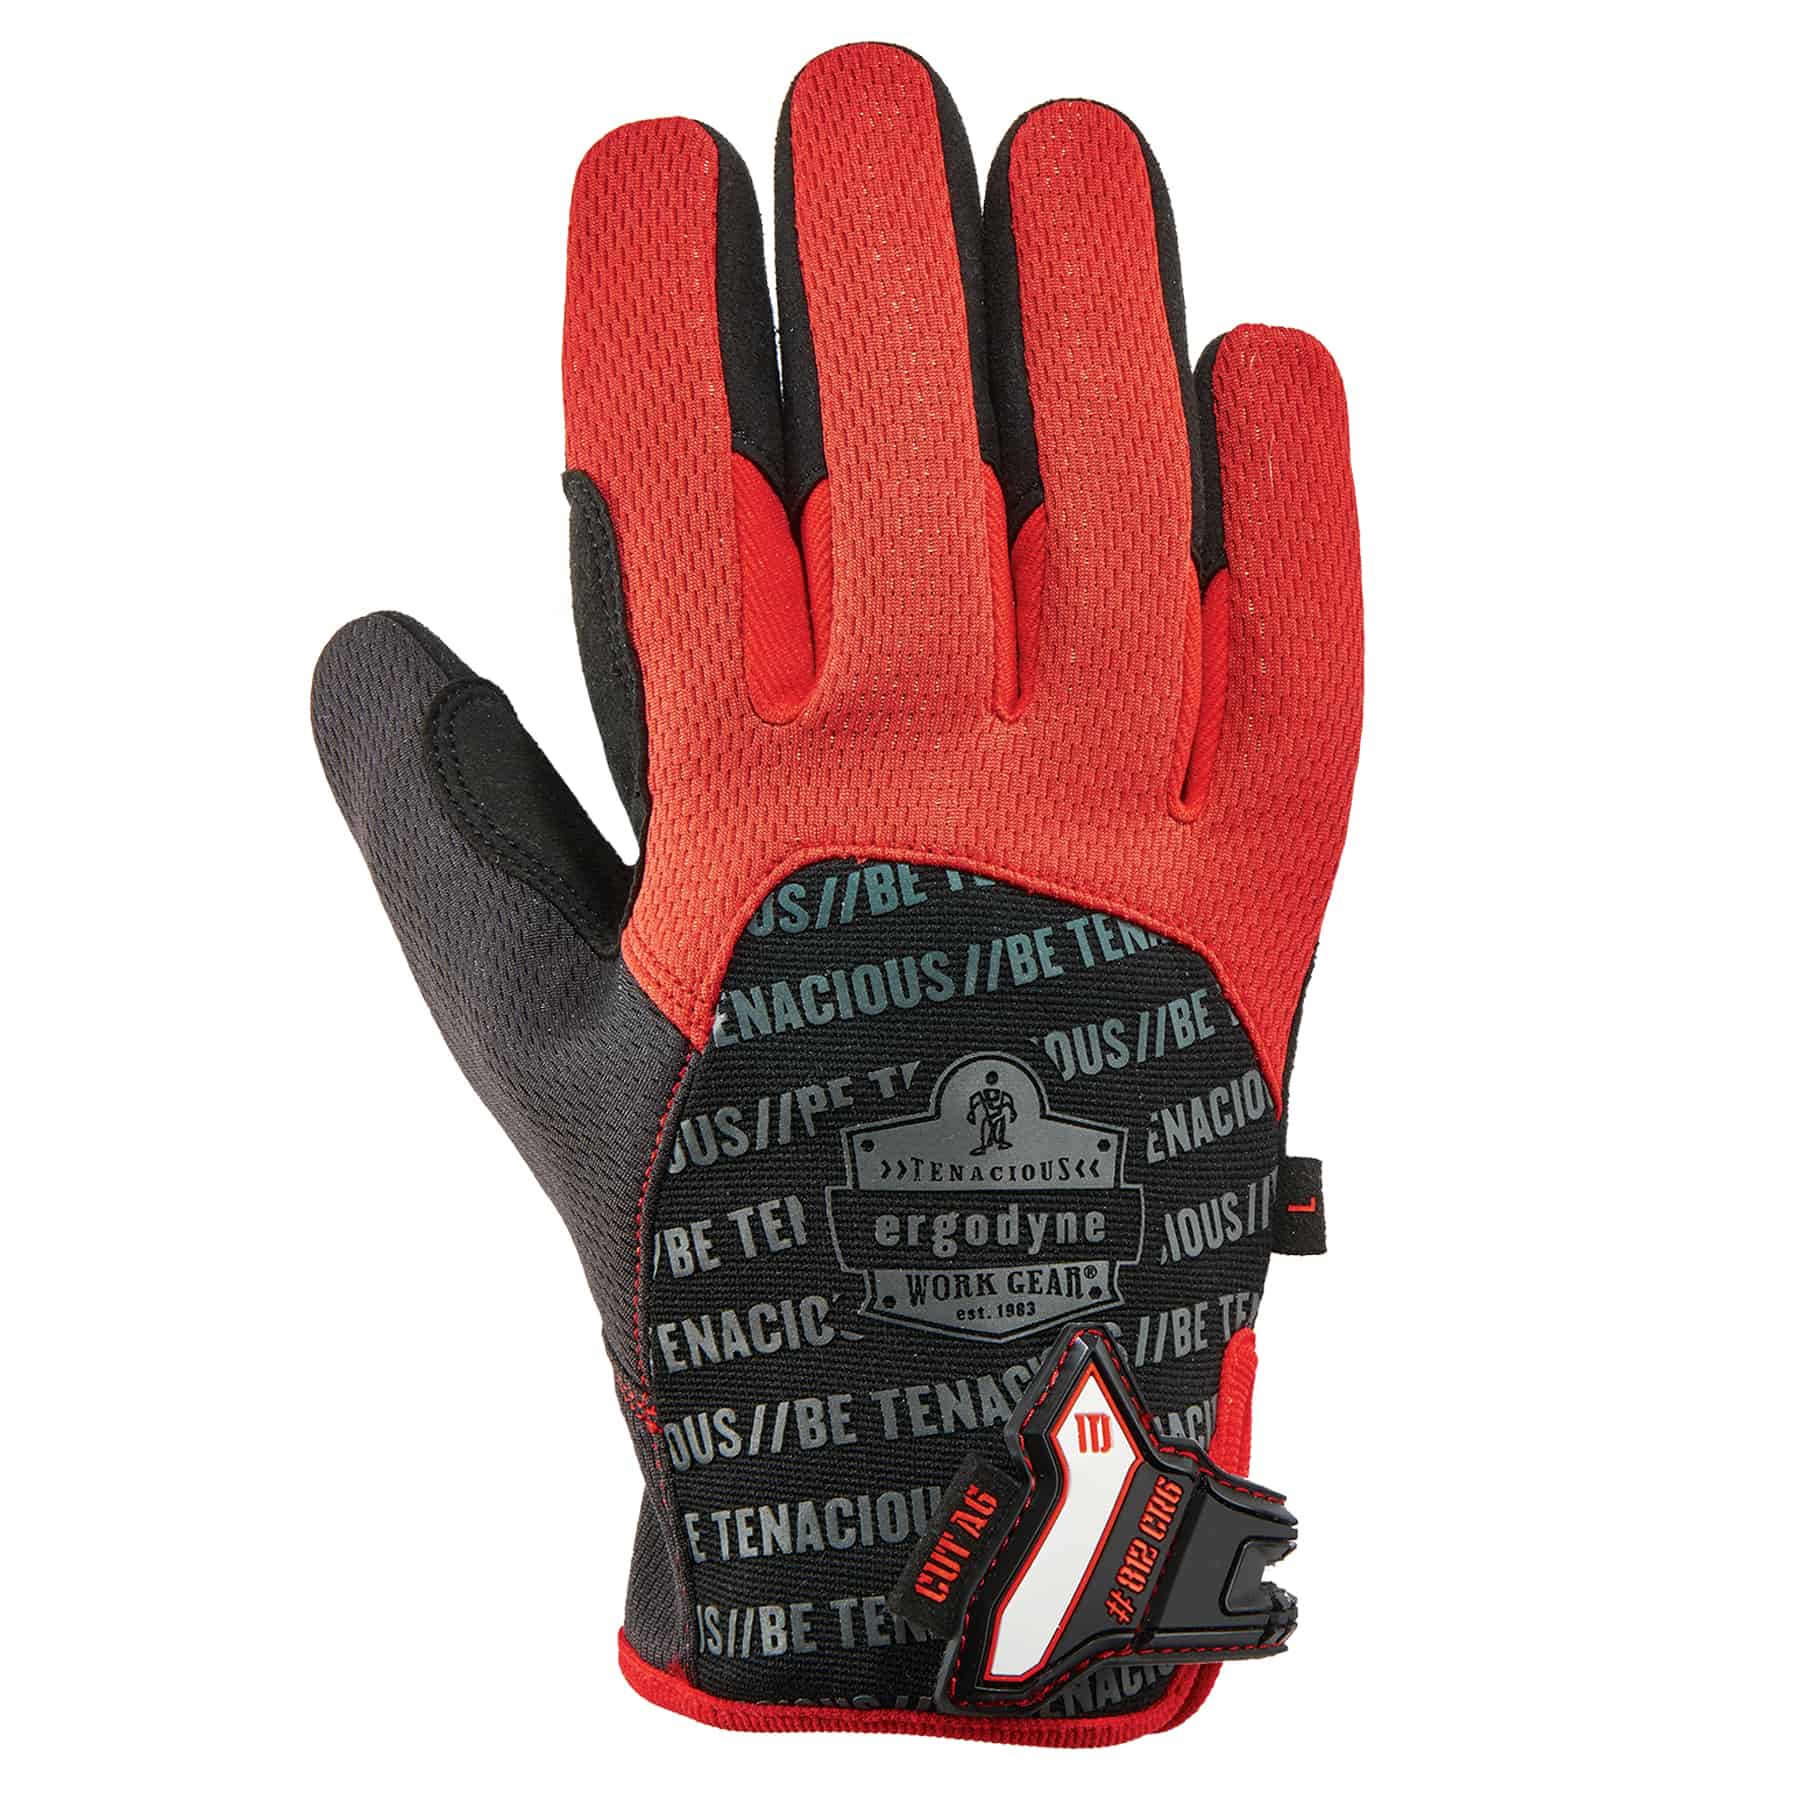 https://www.ergodyne.com/sites/default/files/product-images/17922-812cr6-utility-cut-resistance-gloves-dorsal.jpg